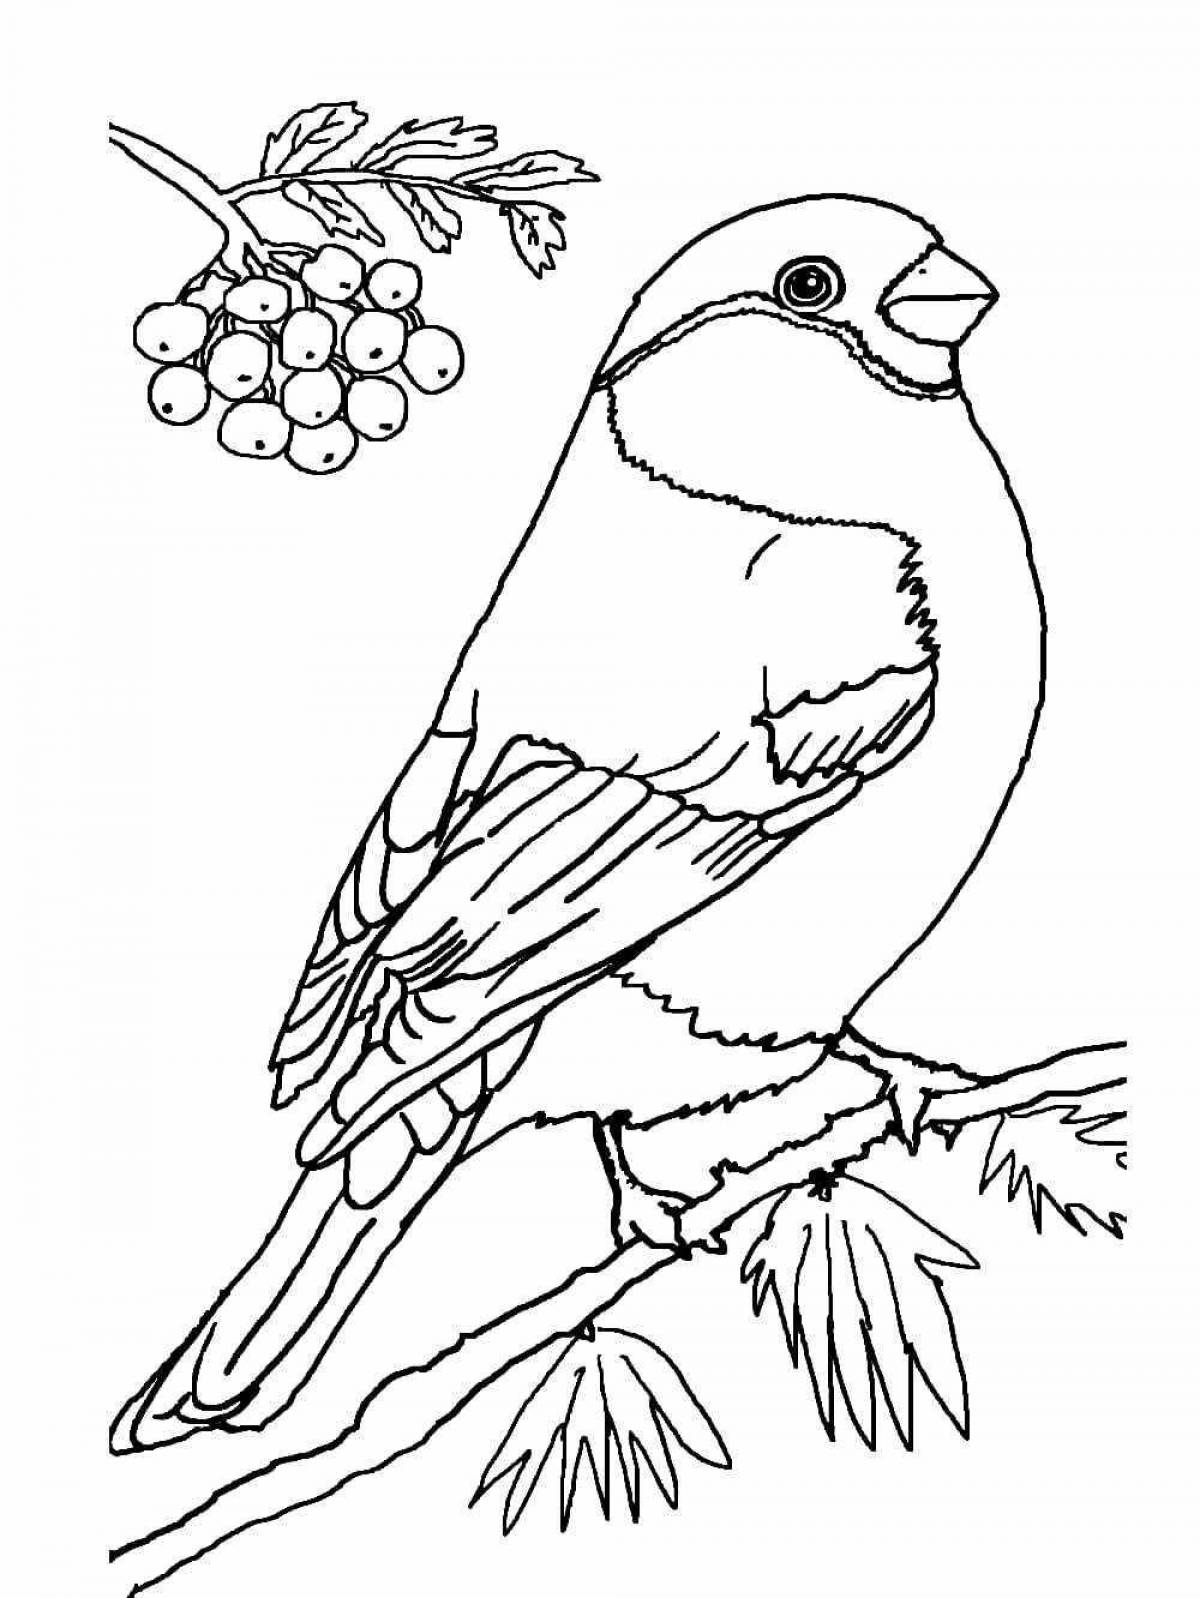 Complex drawing of a bullfinch on a rowan branch